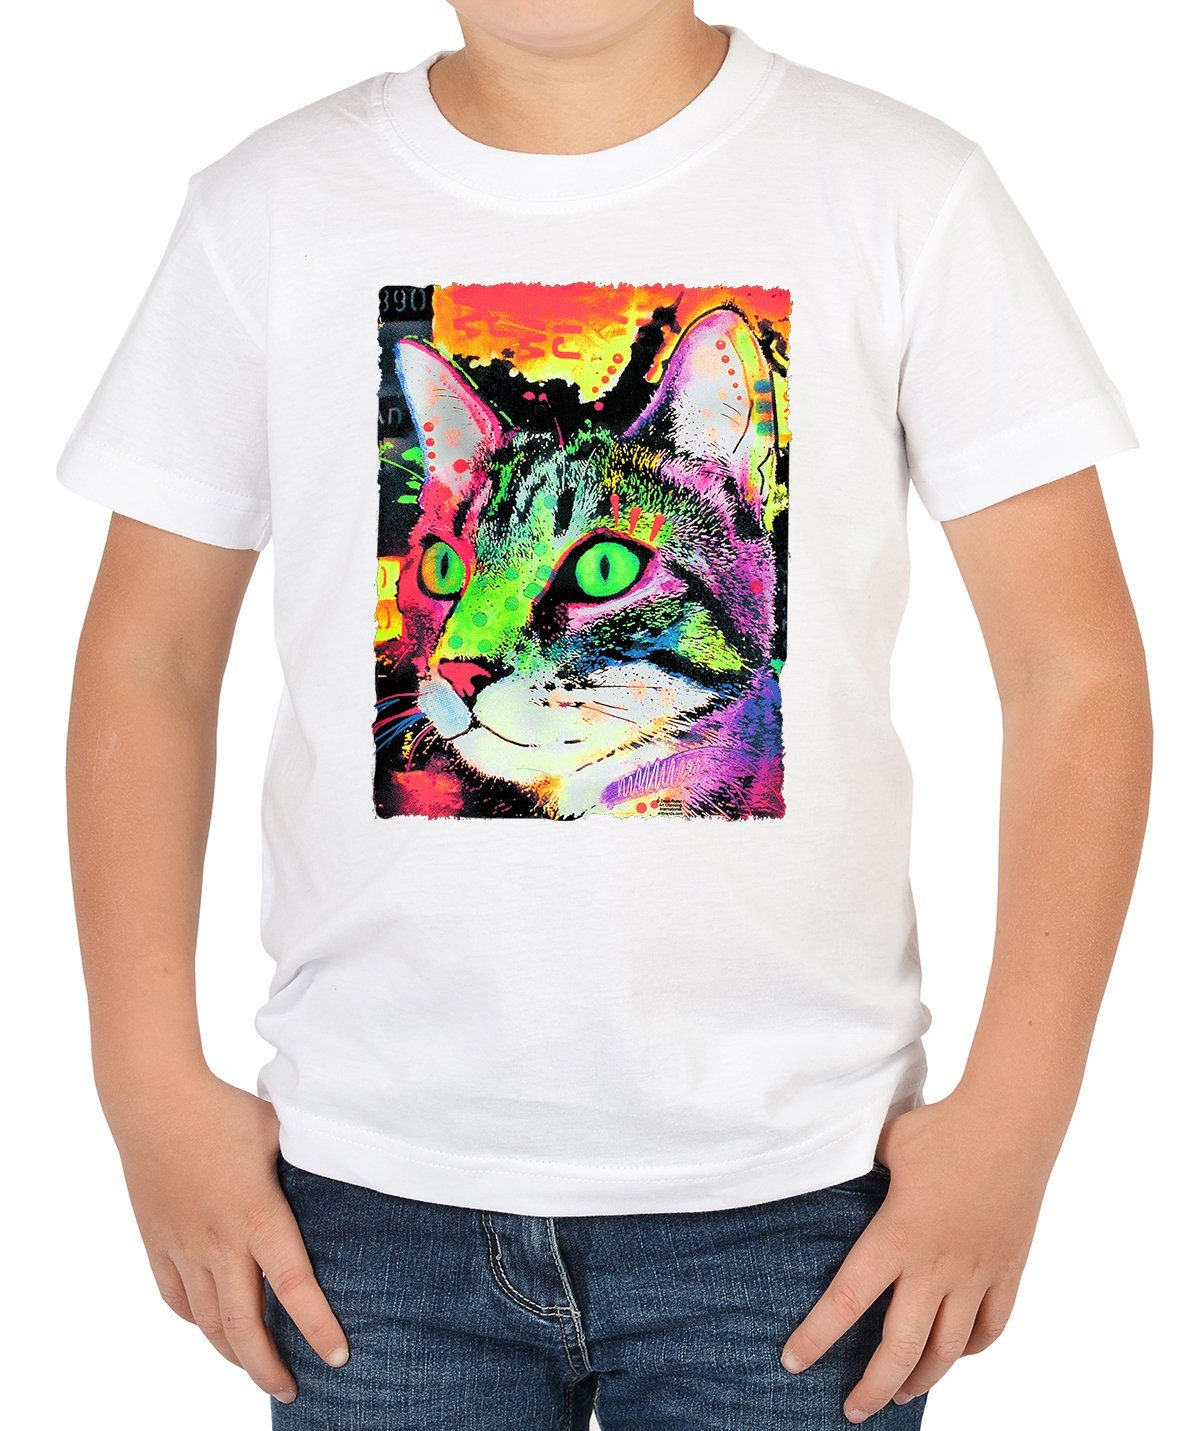 Tini - Shirts Print-Shirt »Katzen Motiv Kindershirt« buntes Katzenmotiv  Shirt für Kinder : Curiosity Cat online kaufen | OTTO